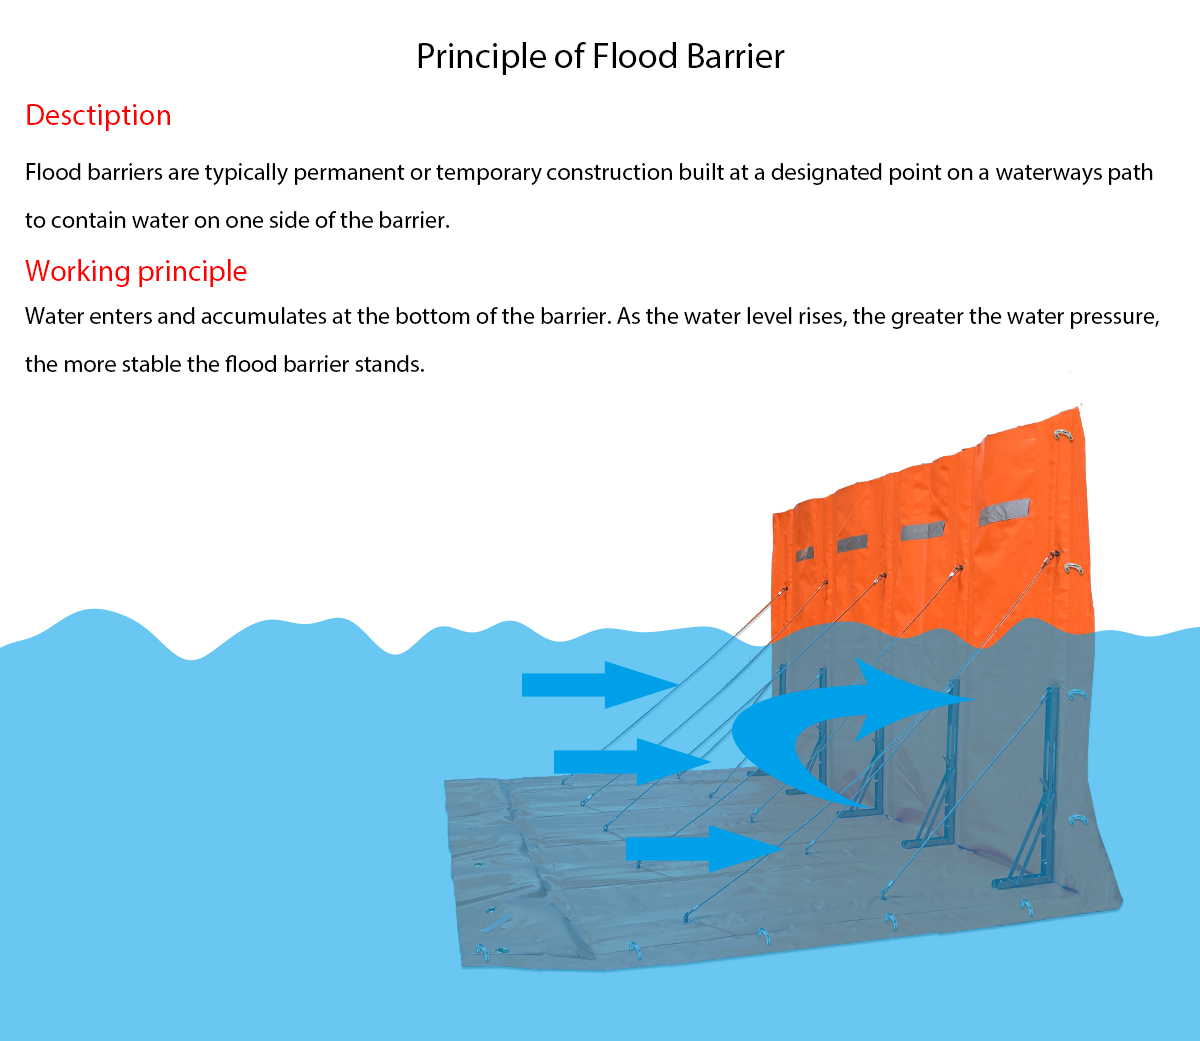 Working principle of flood barrier